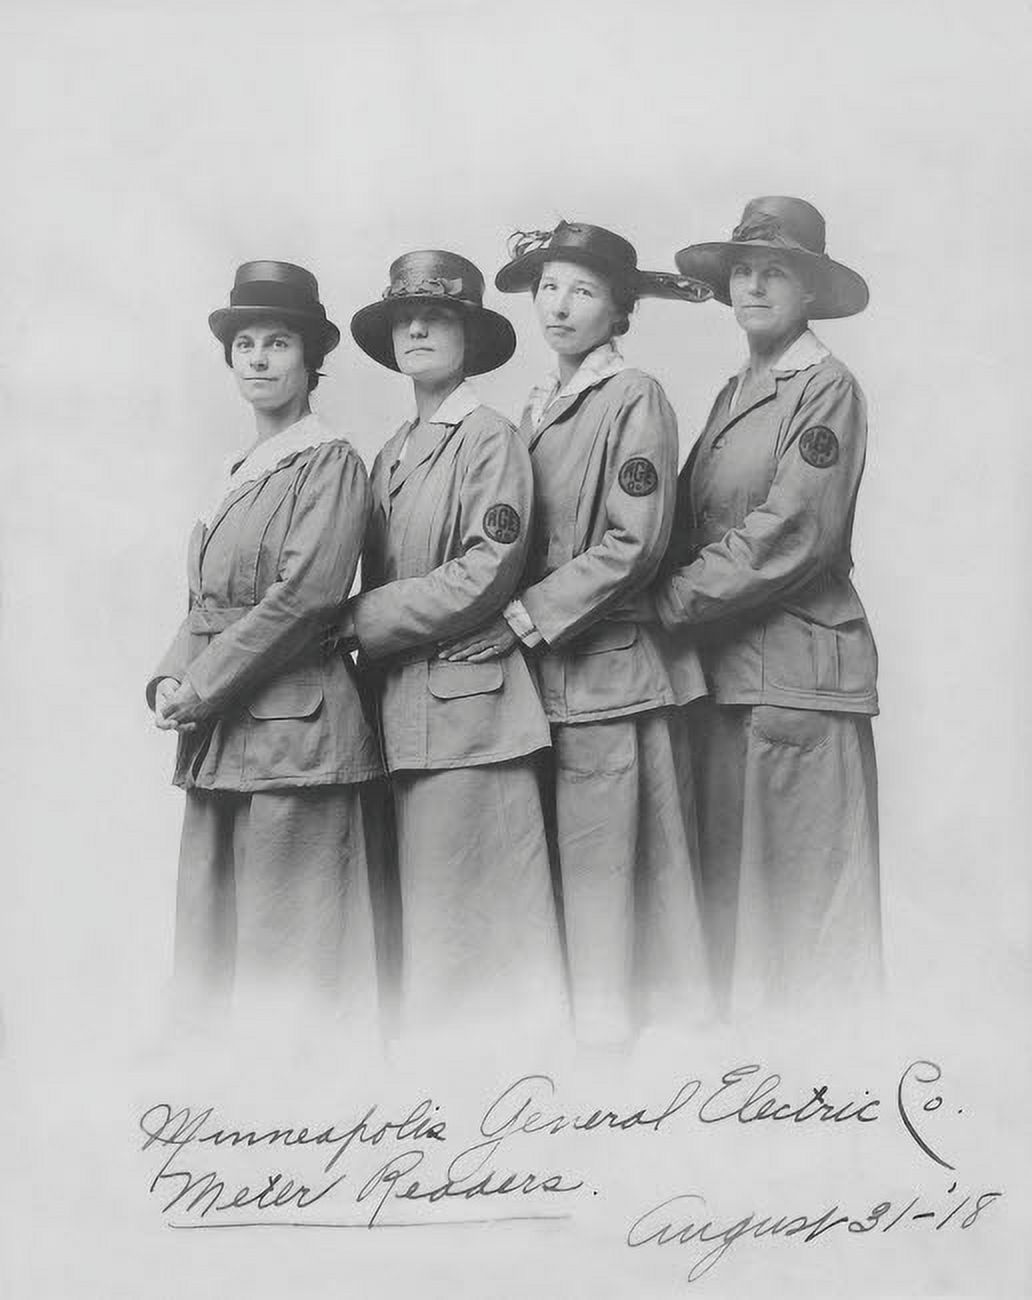 Minneapolis General Electric Company Meter Readers, 1918 Poster Print by Stocktrek Images (11 x 17) - image 1 of 1